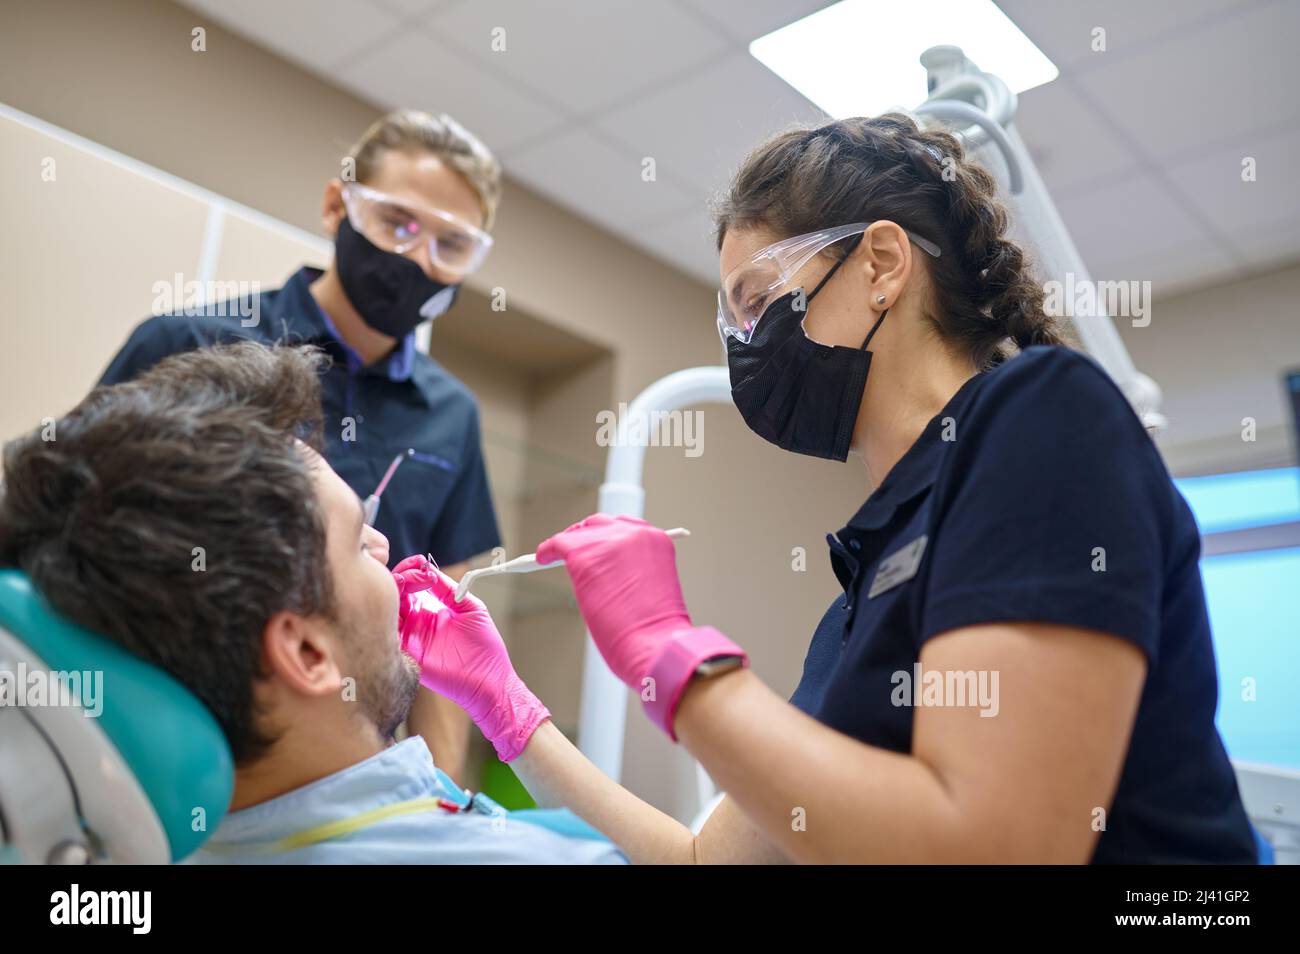 Patient having teeth examination at dental consultation Stock Photo